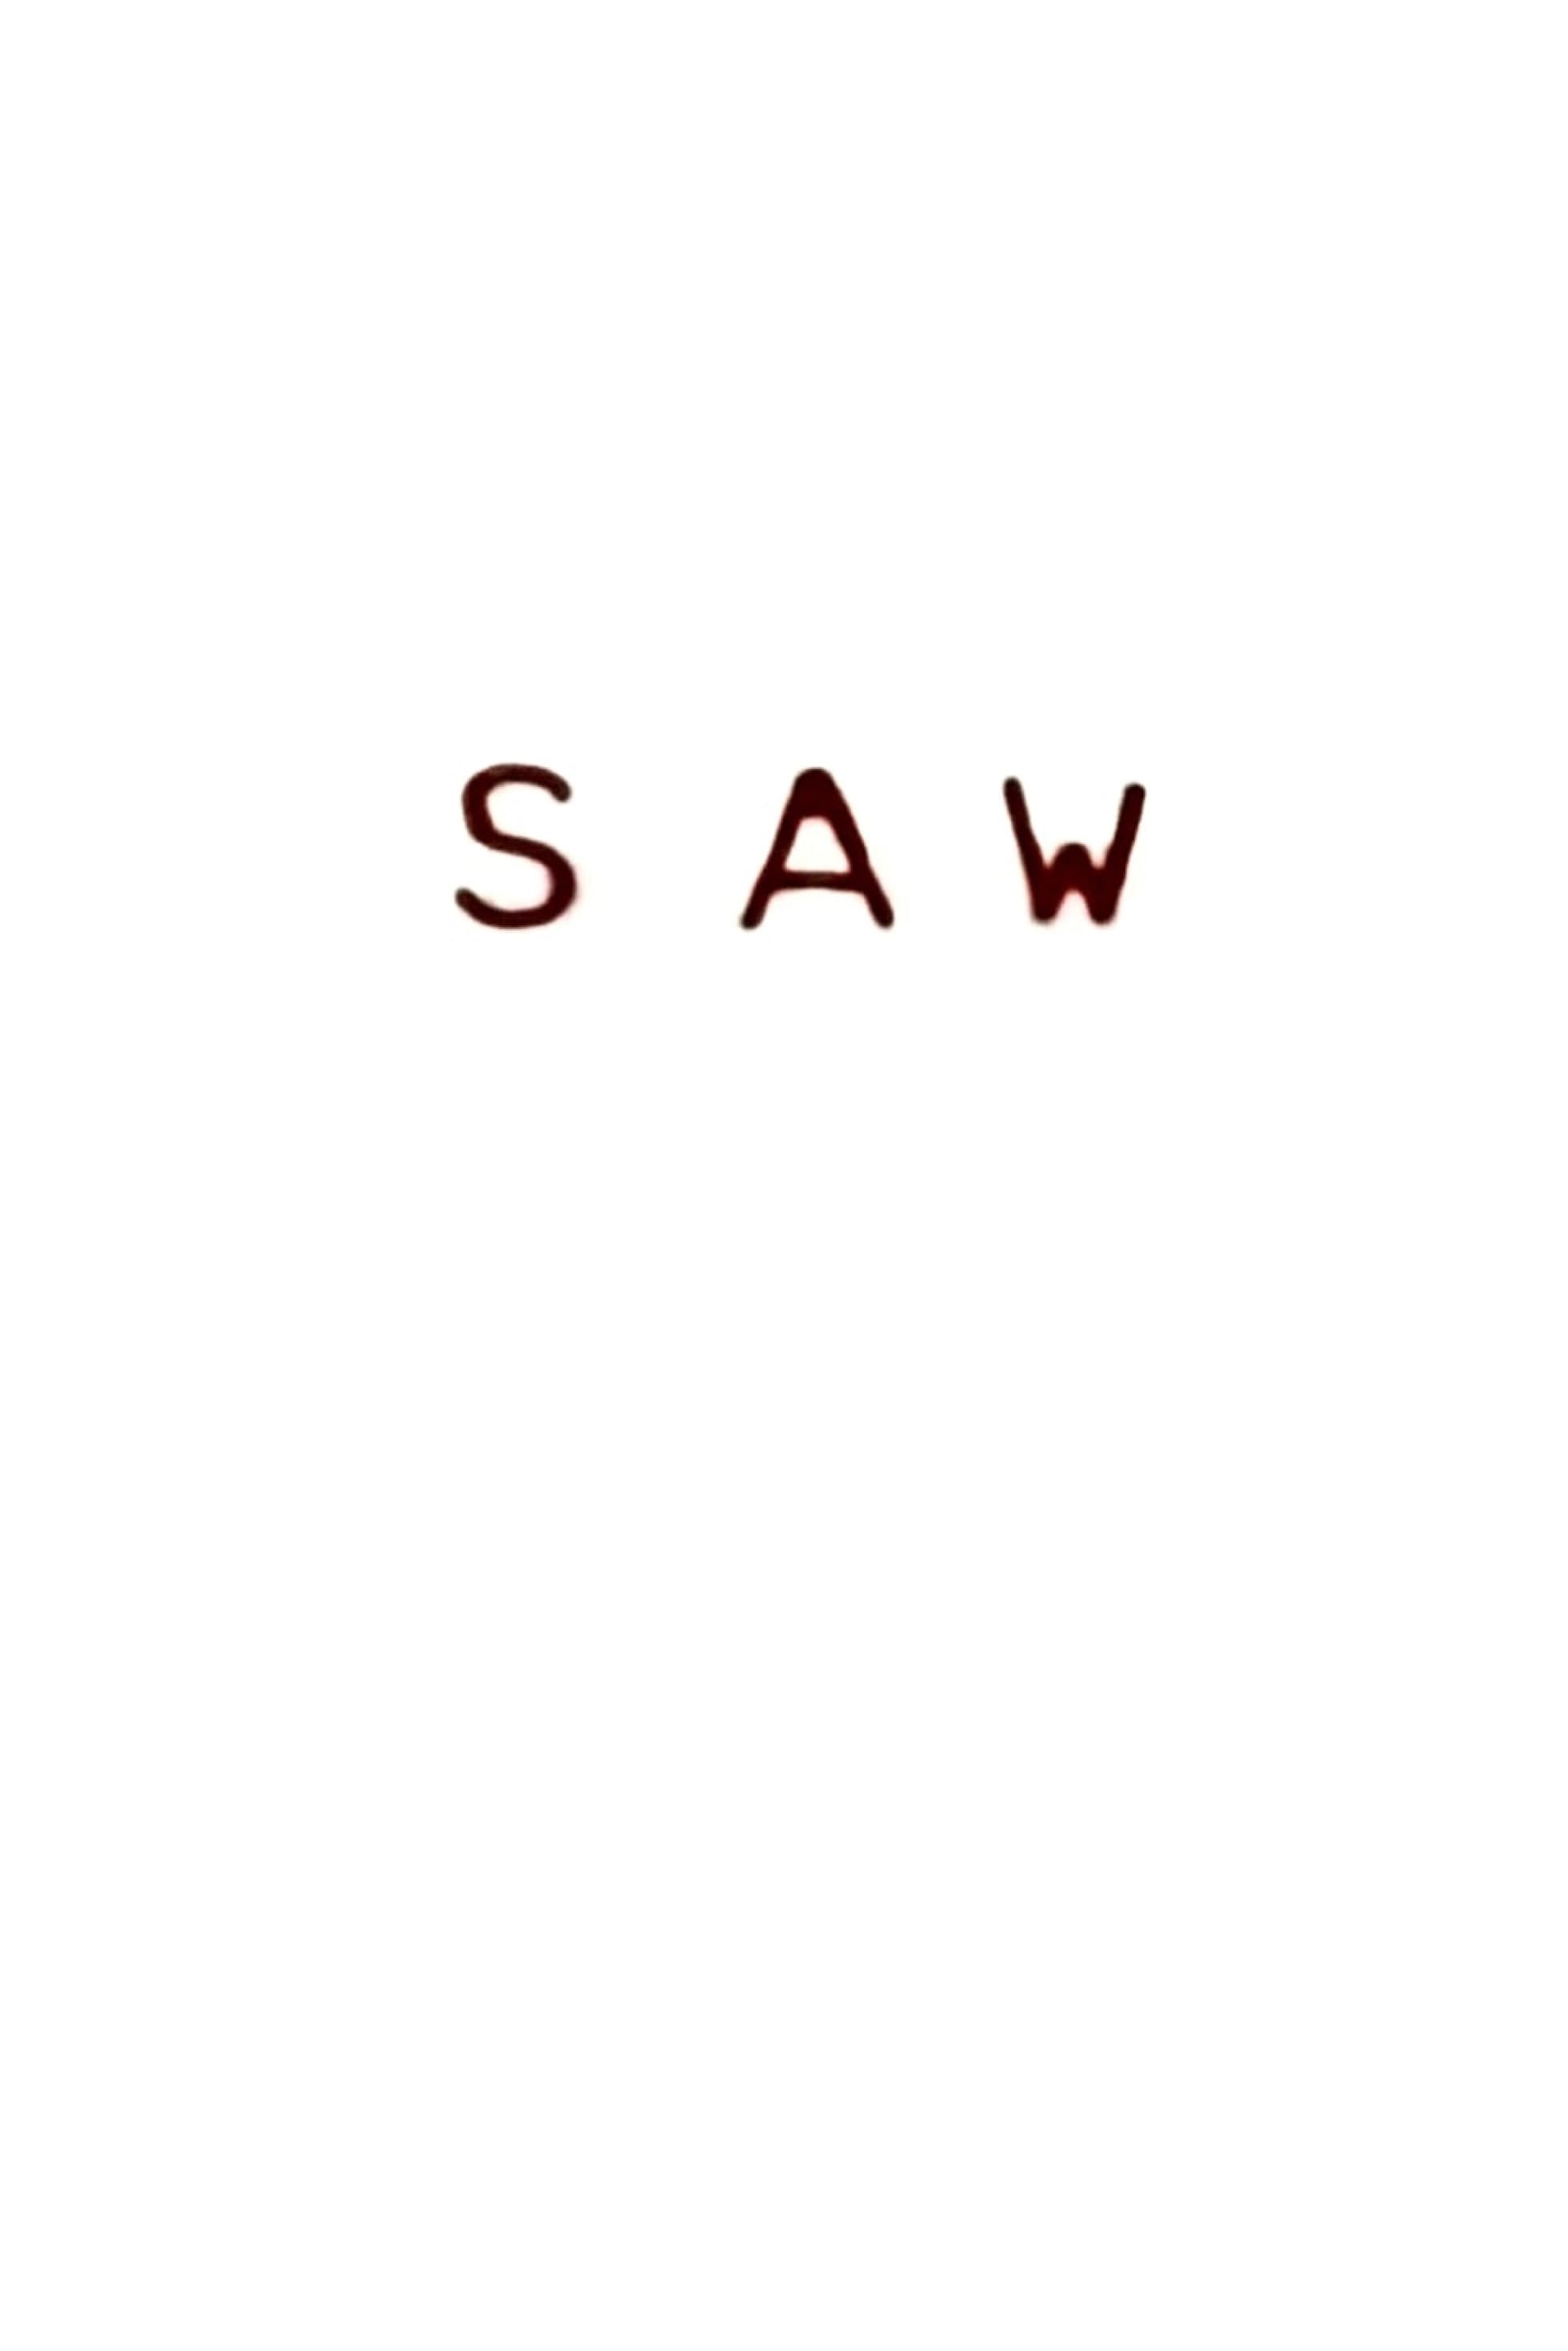 Saw (Corto original)